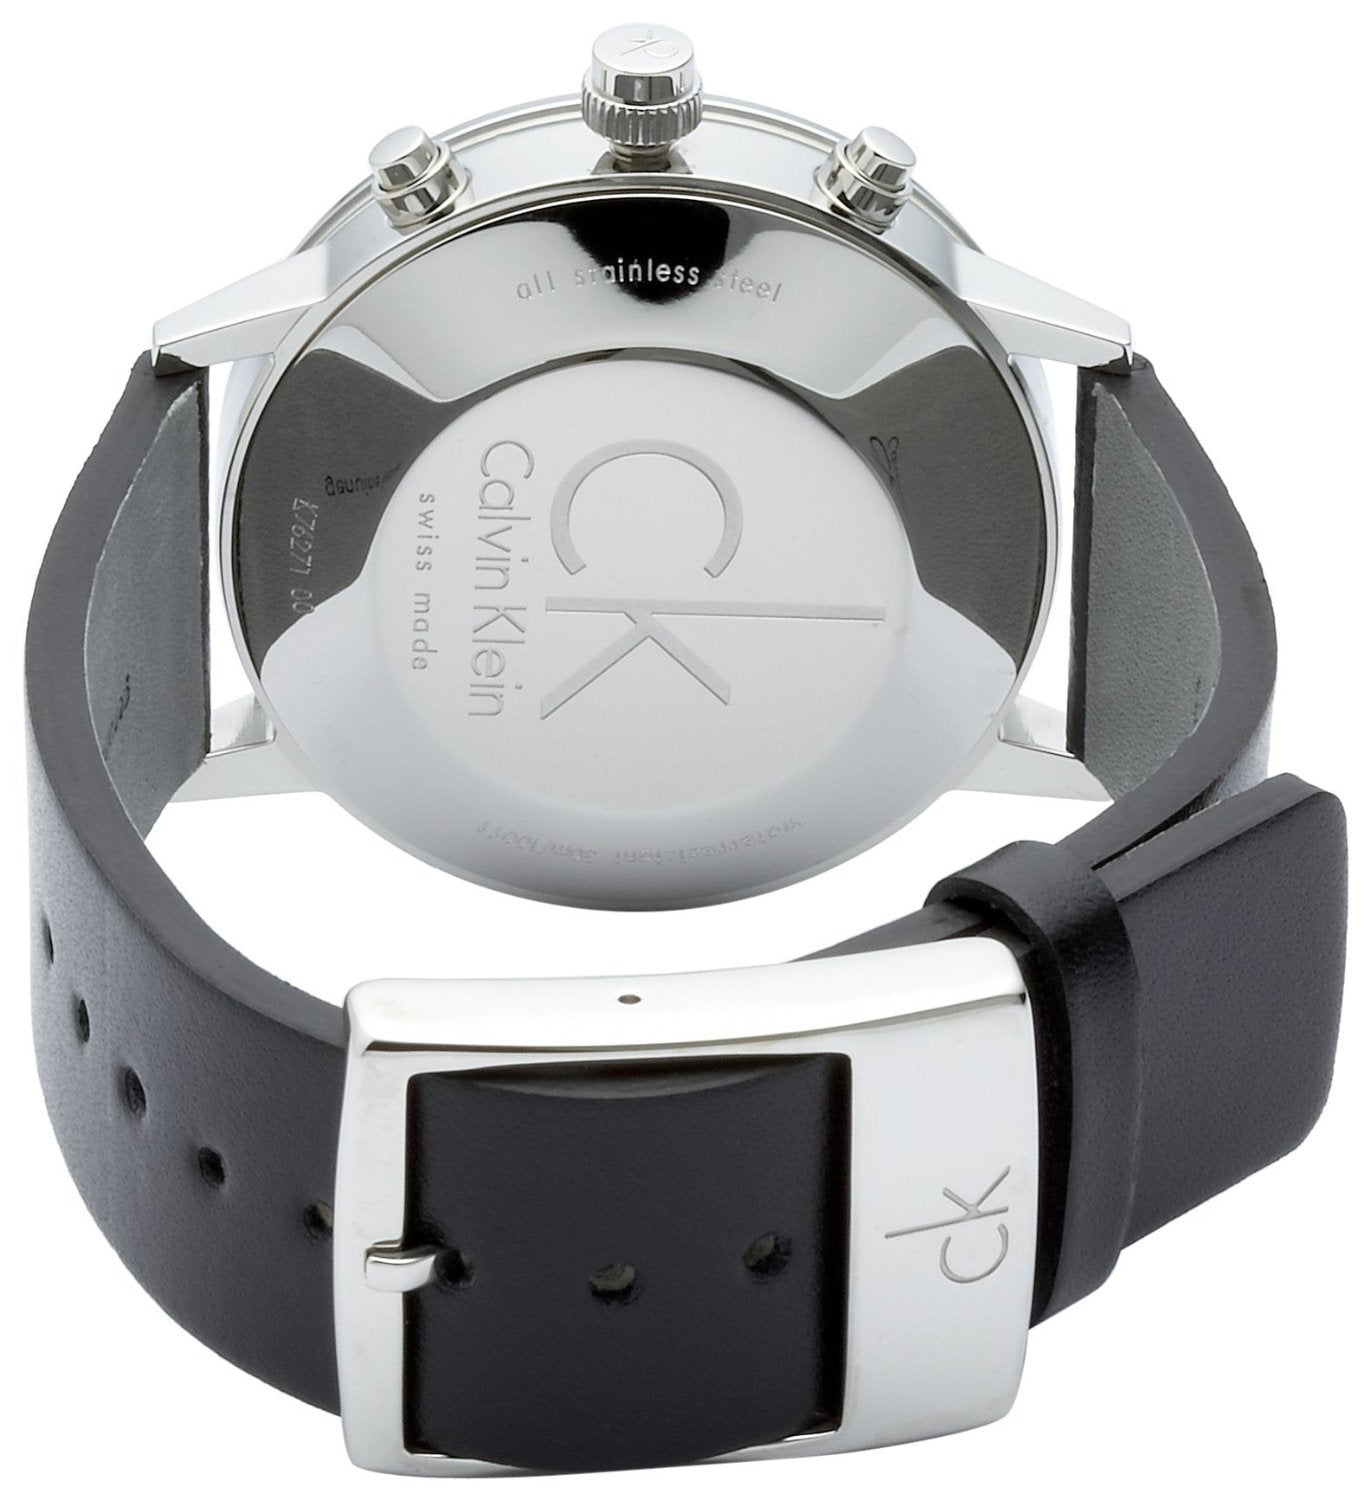 Calvin Klein Post Minimal Chronograph Black Dial Black Leather Strap Watch for Men - K7627107